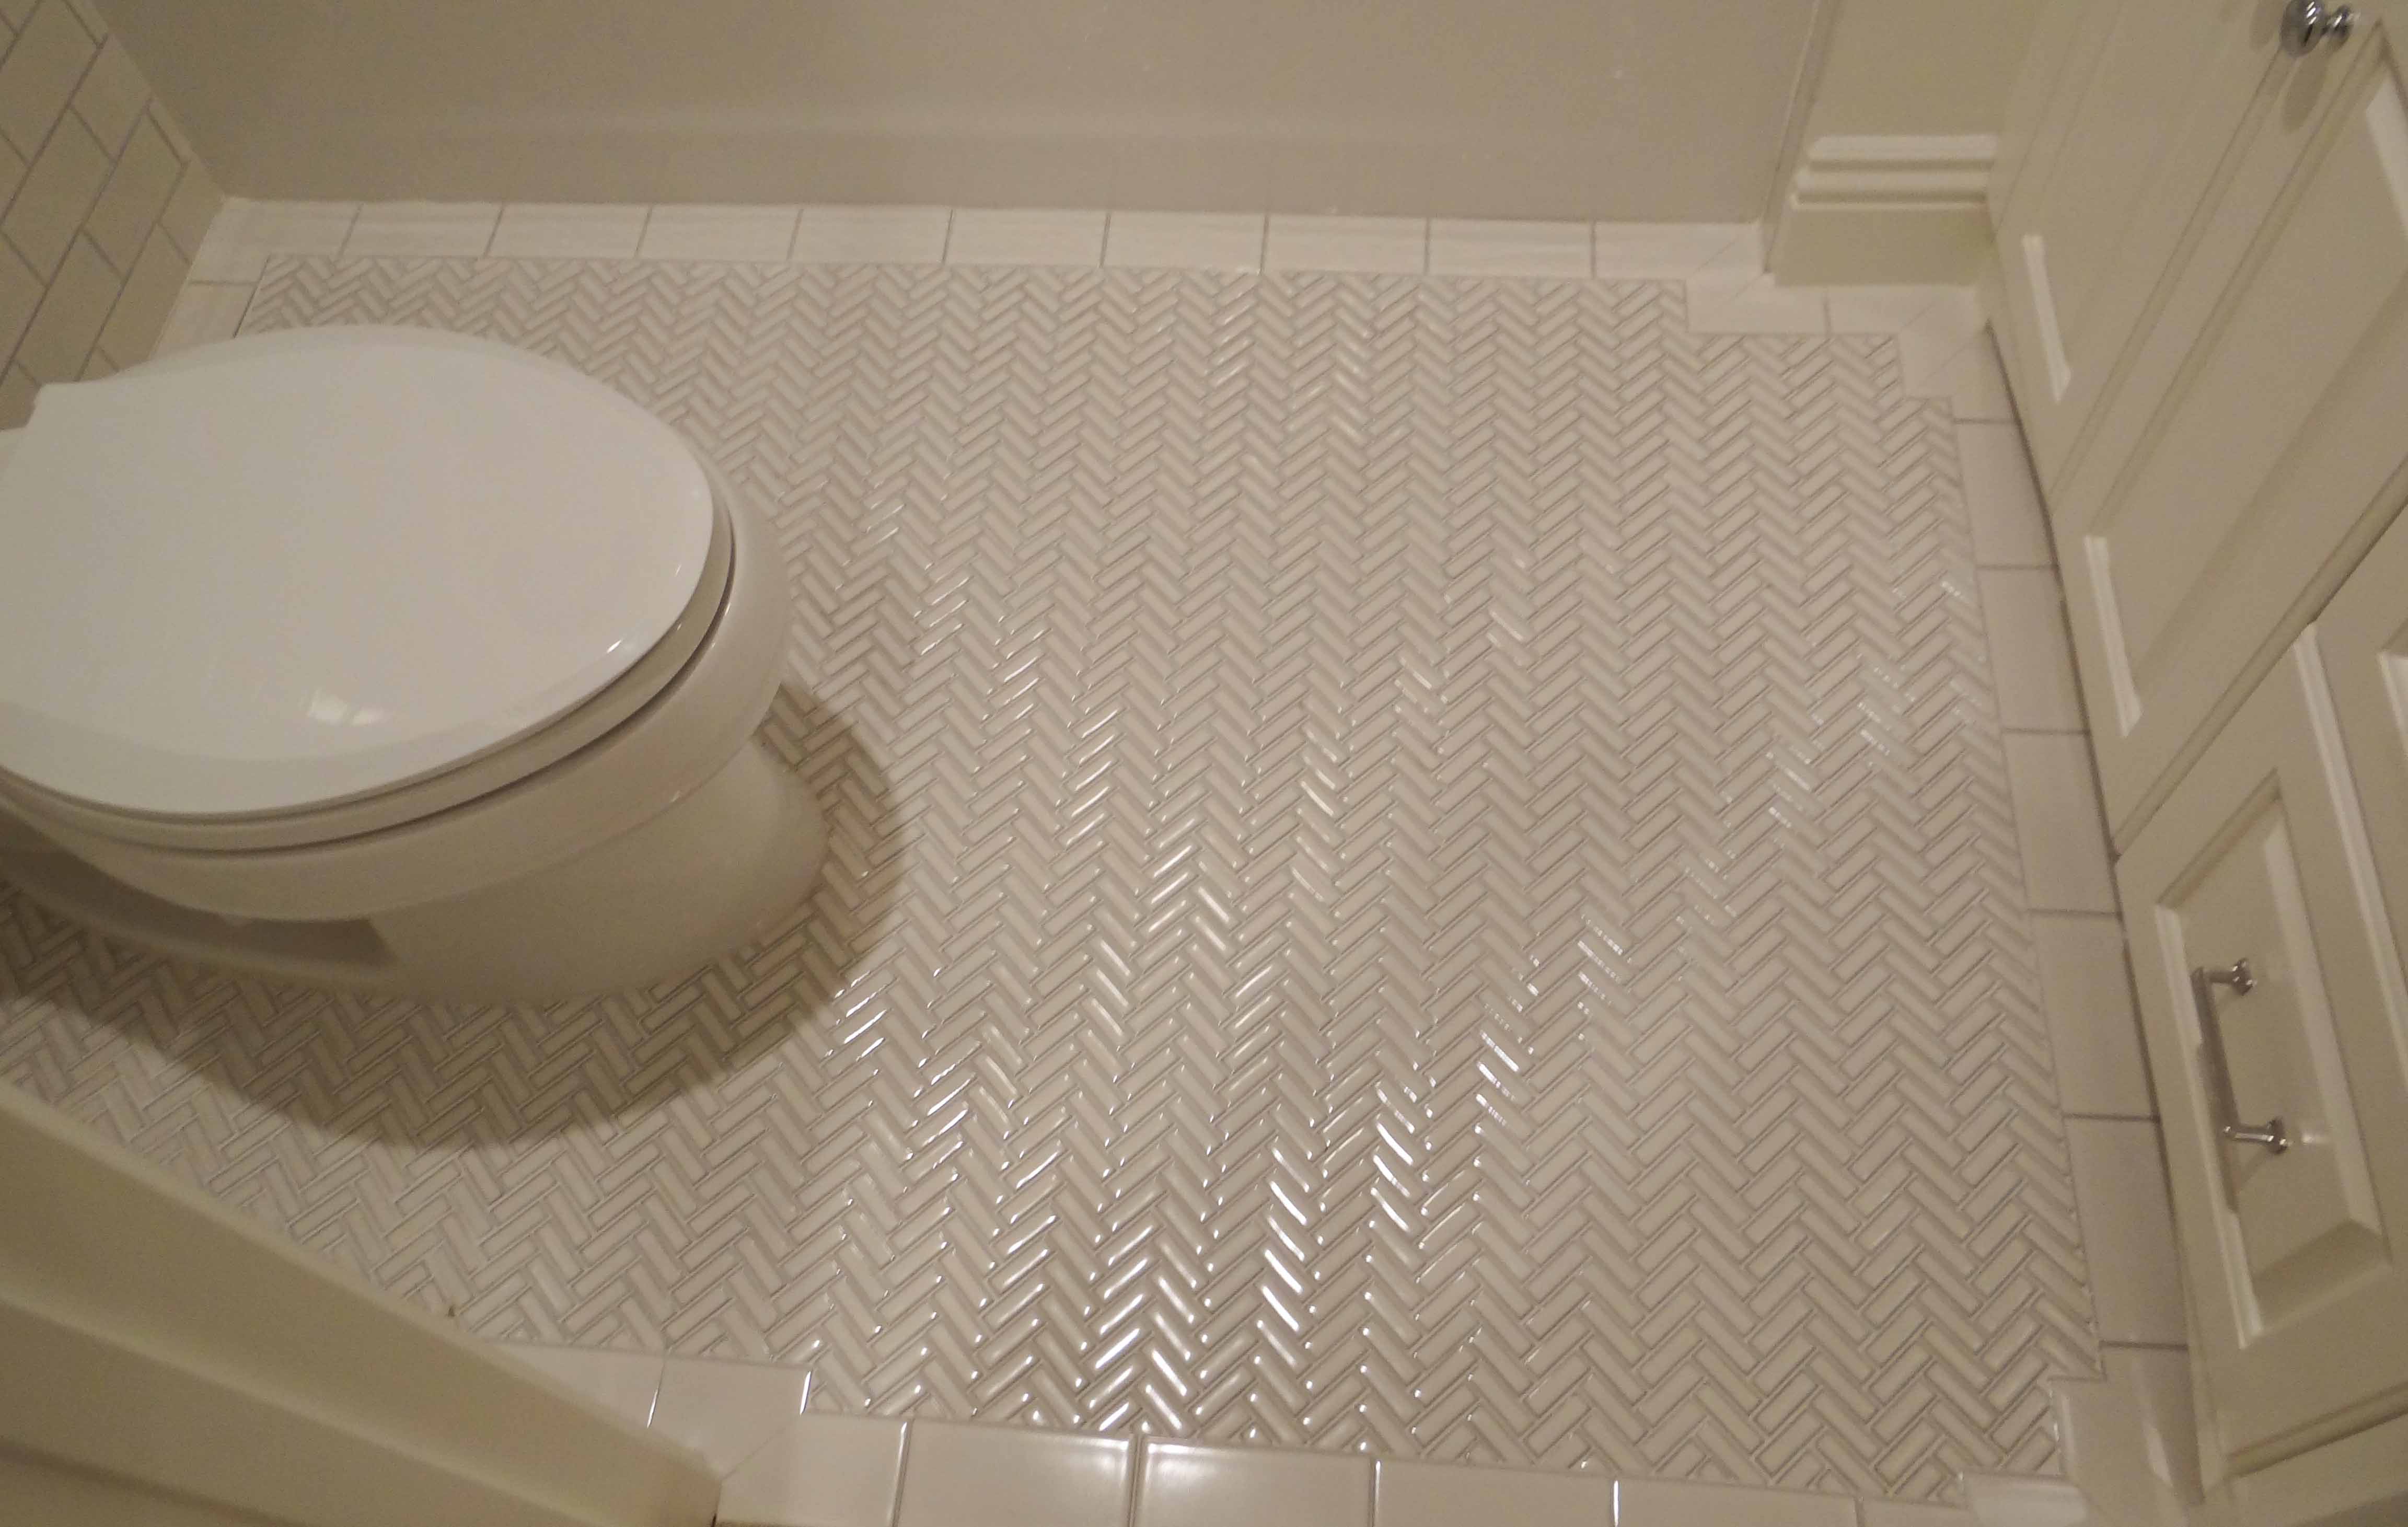 Exterior ceramic tiles and interior ceramic tiles for floor tiles, wall tiles, mosaic tiles, kitchen floor tiles, and bathroom tiles